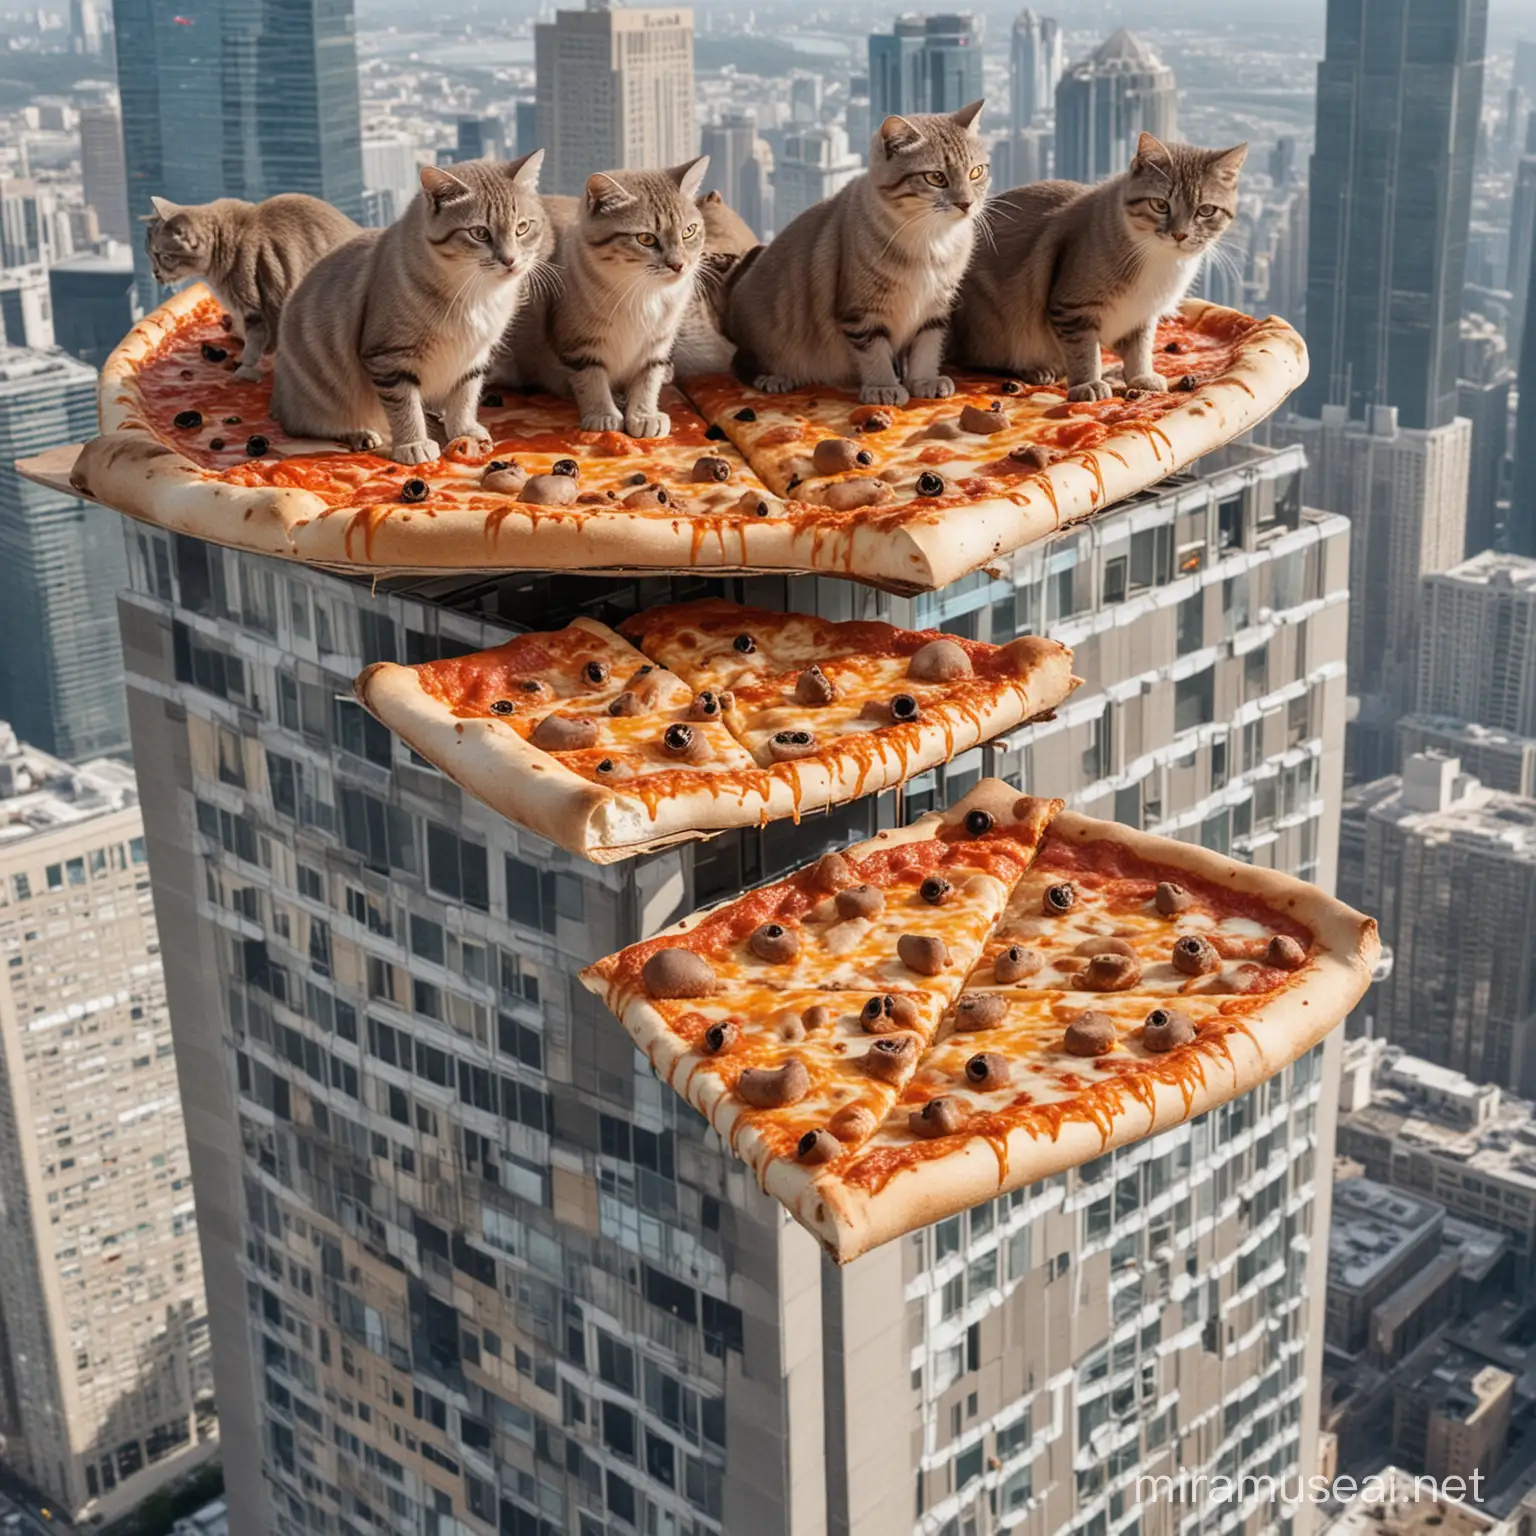 Feline Friends and Otters Enjoying a Jumbo Pizza on Skyscraper Rooftop